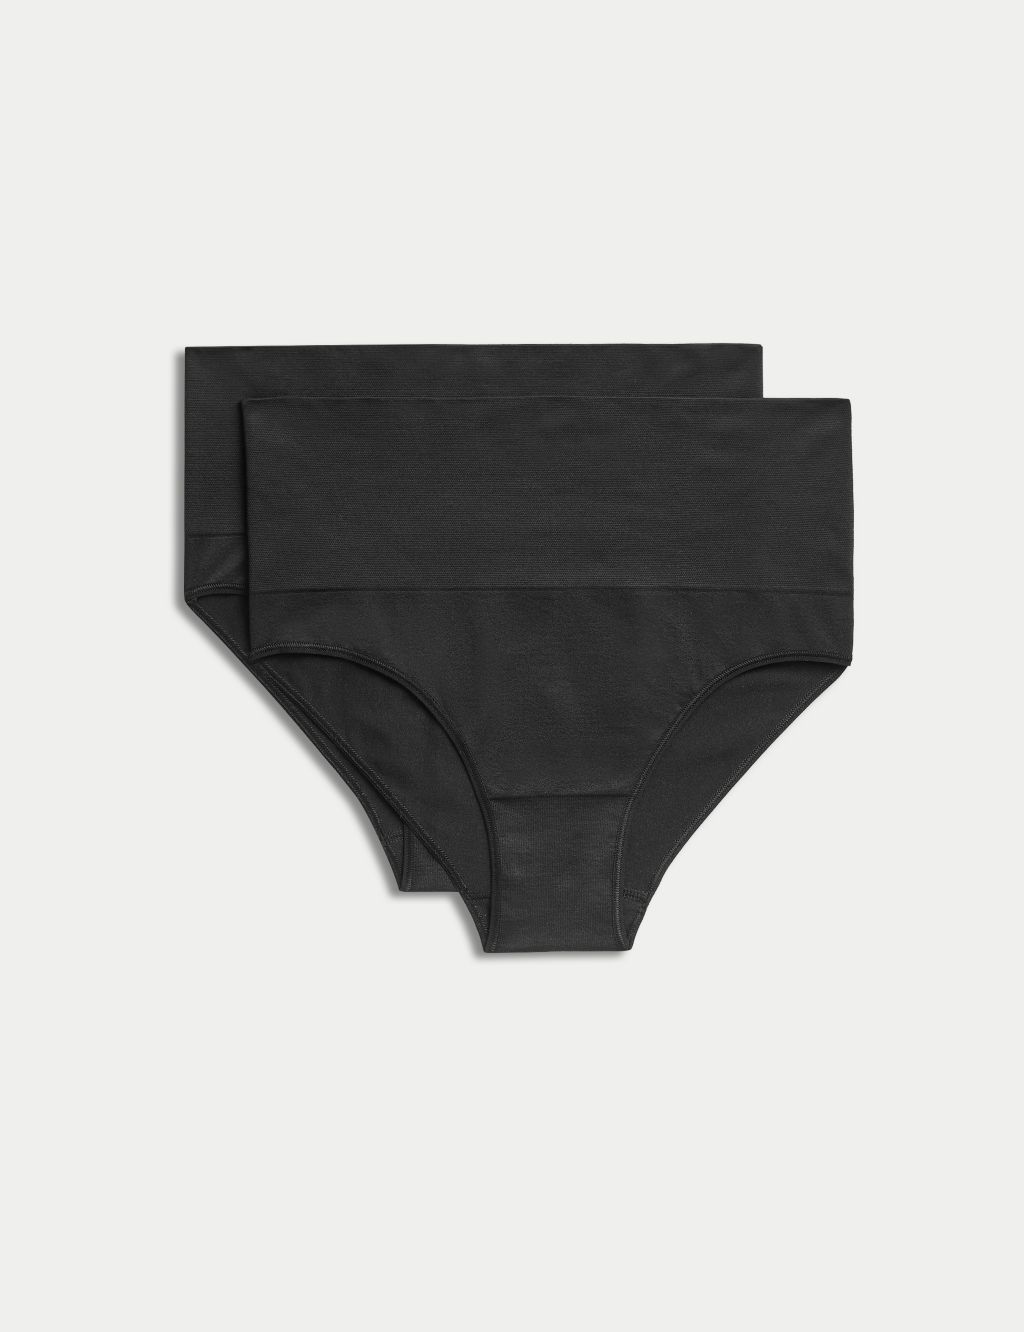 adidas Women's Seamless Hi-Leg Brief Panty Underwear, Black, X